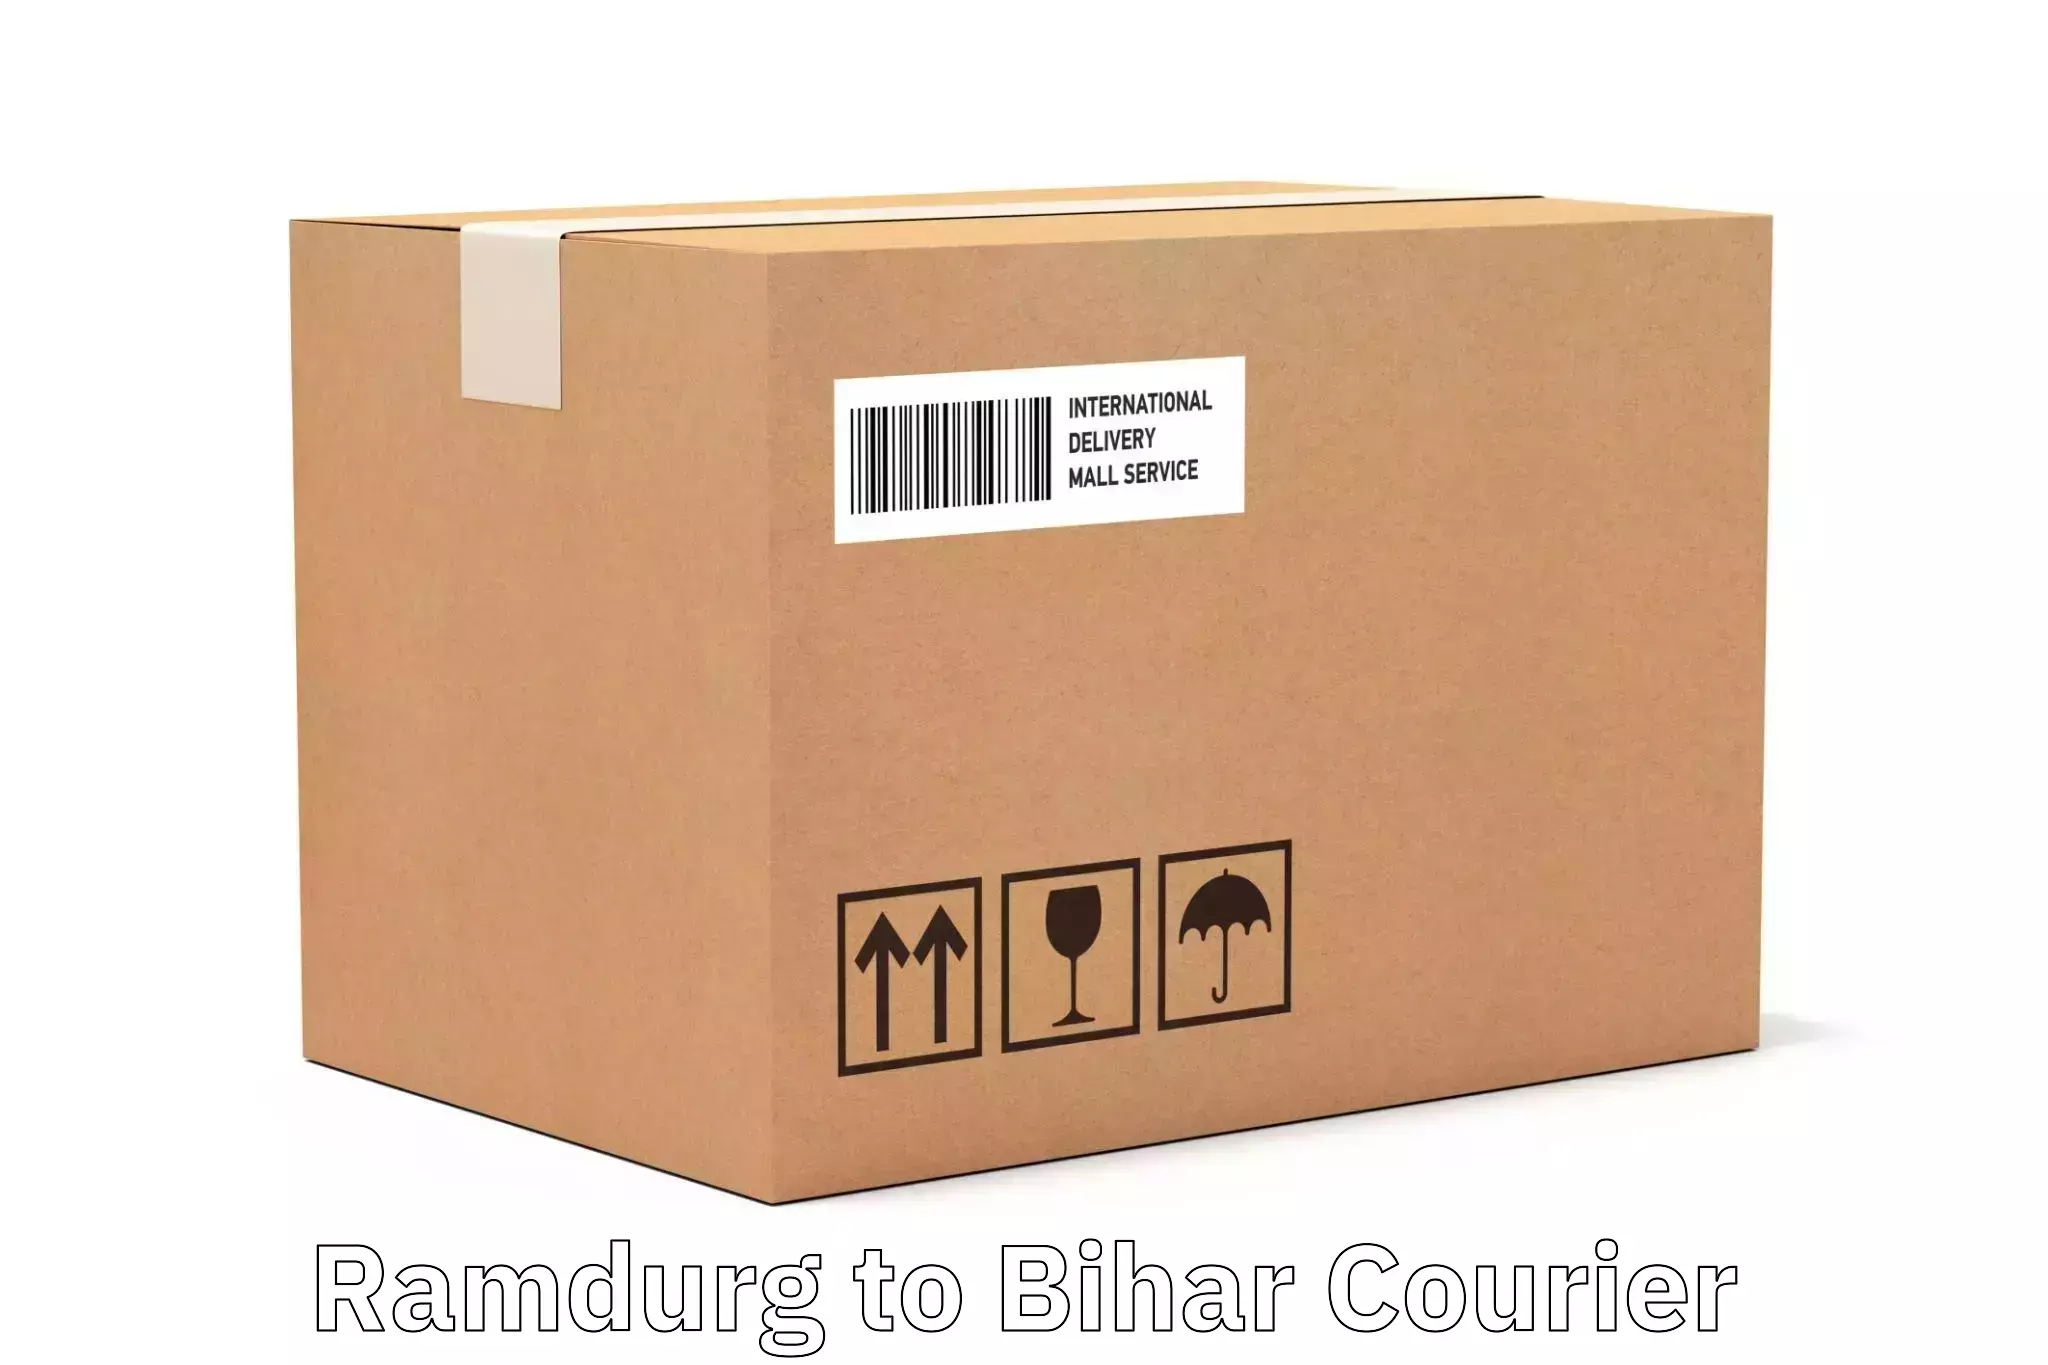 Global logistics network Ramdurg to Bihar